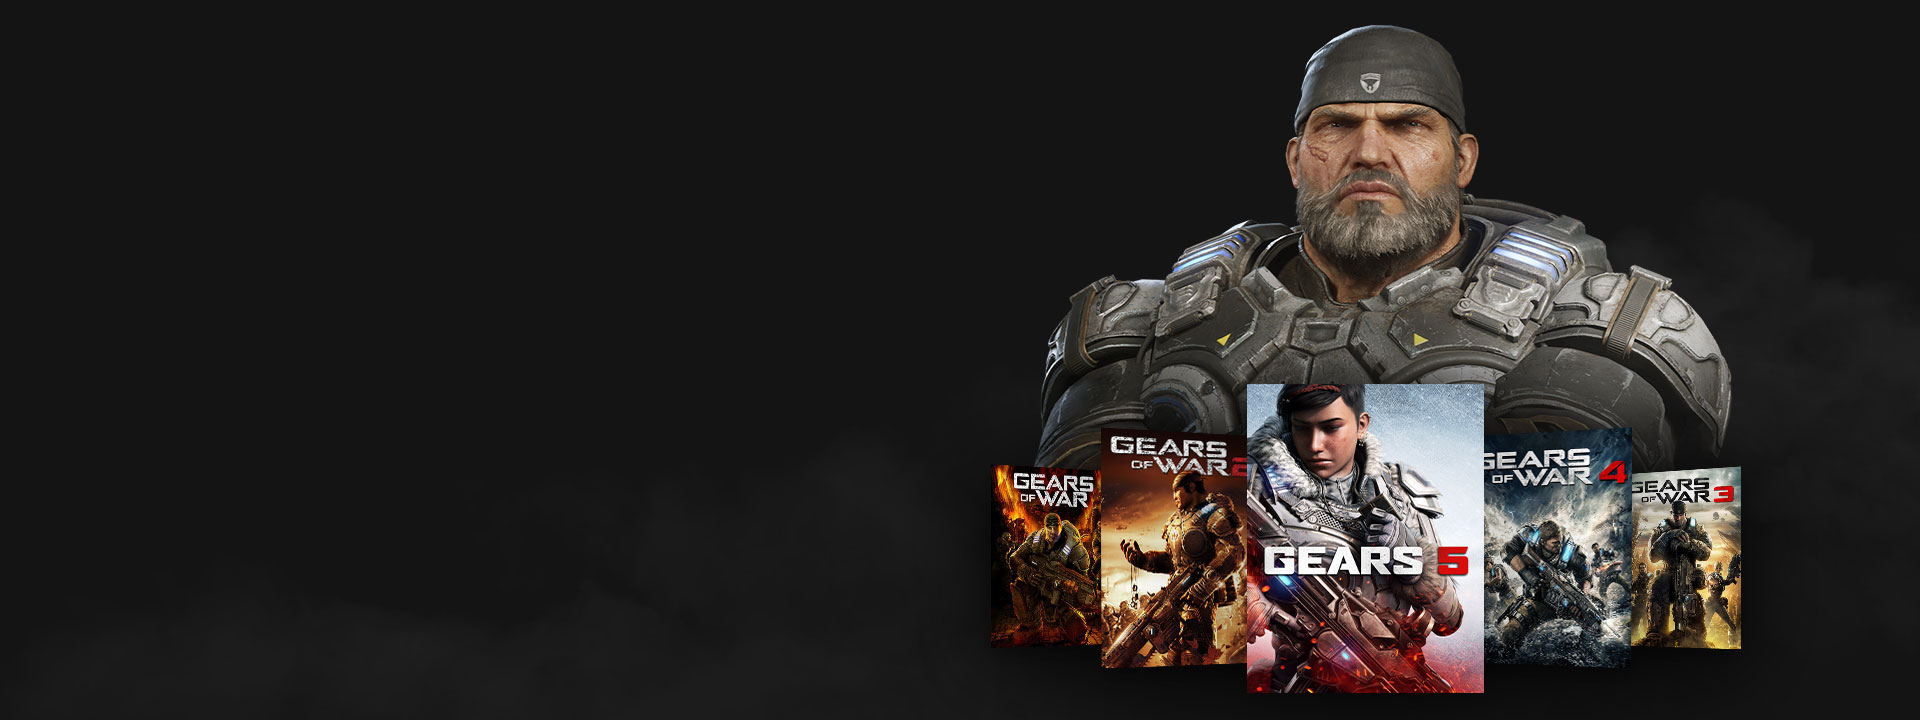 Xbox Game Pass-logo, Marcus poserer med Gears of War-spillene.